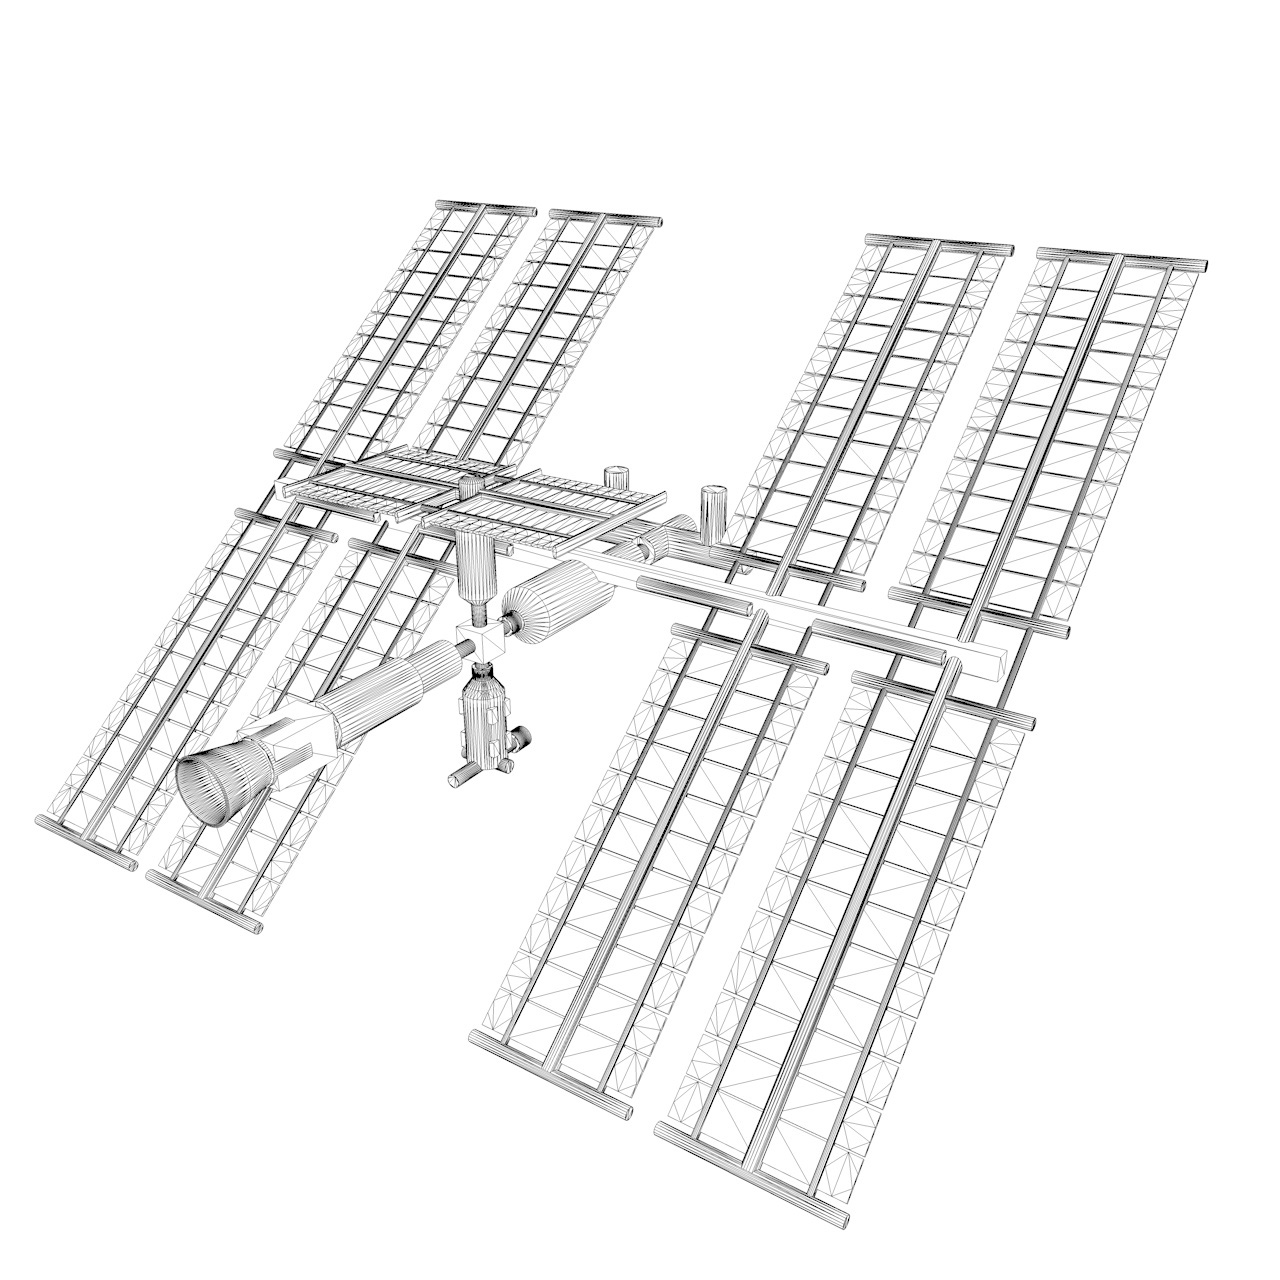 Space station 3d model